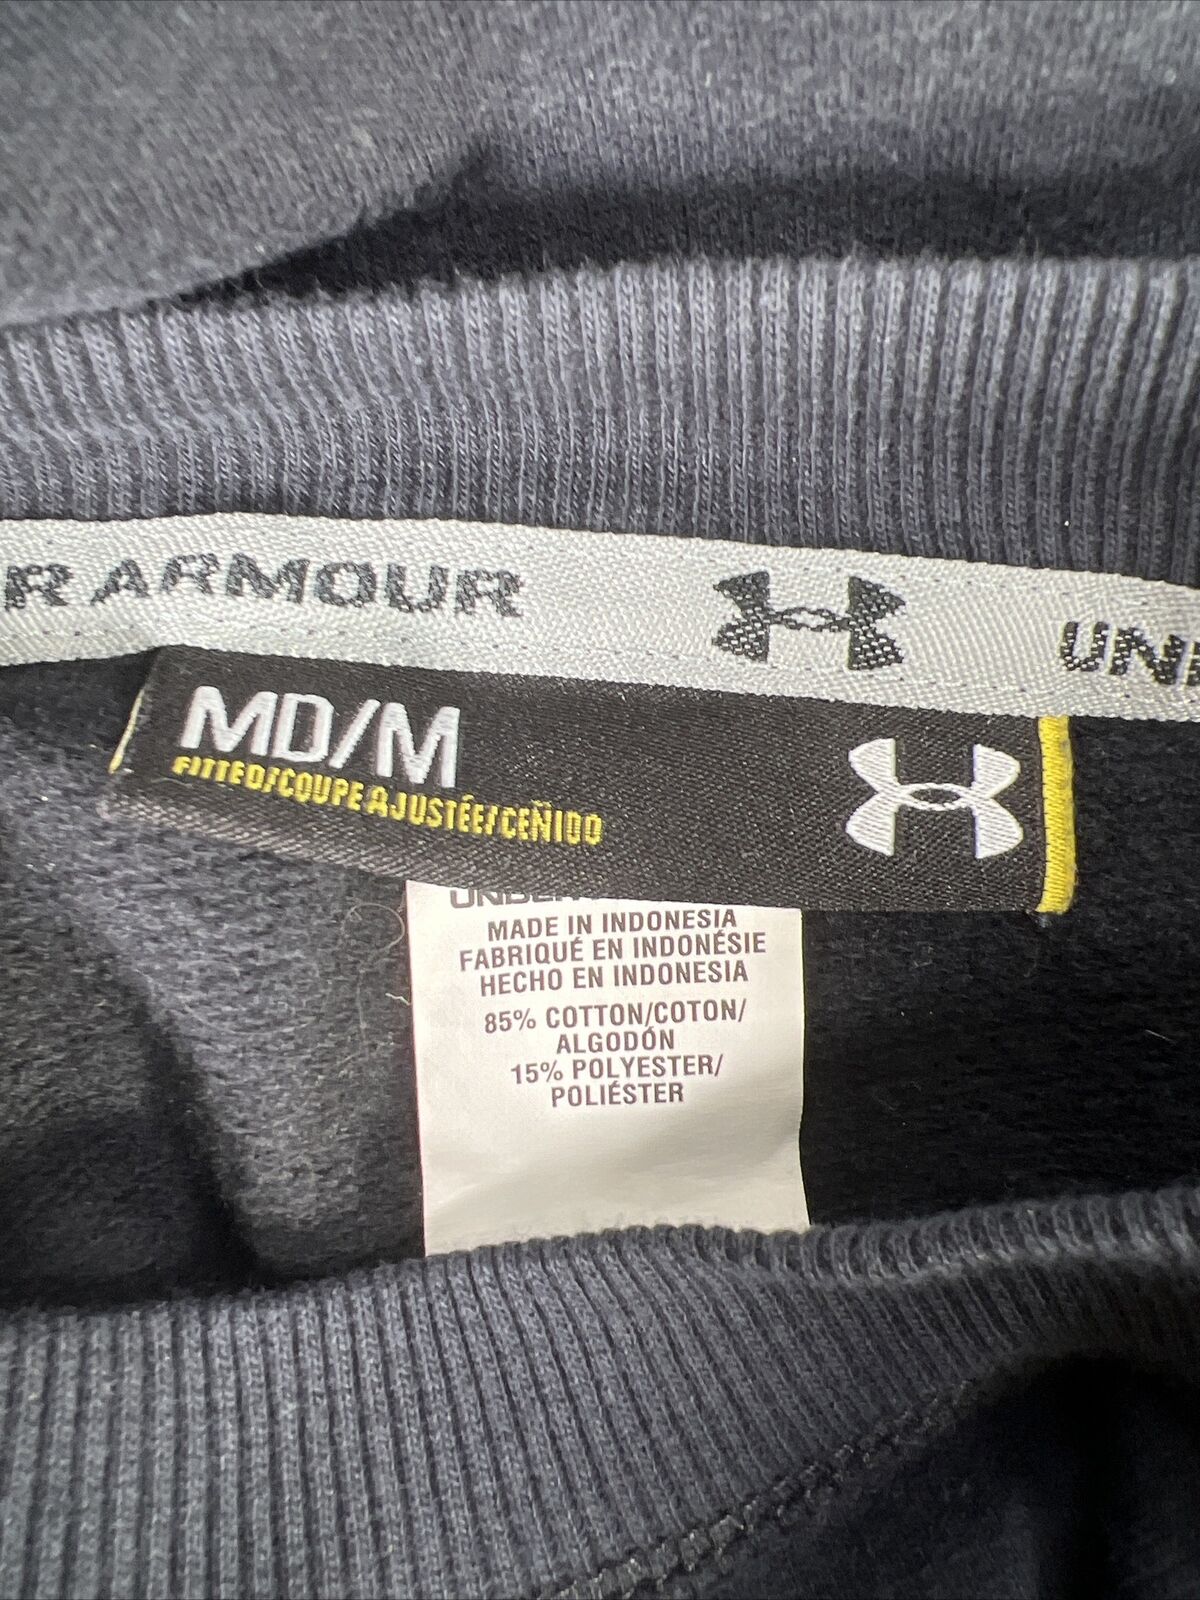 Under Armour Men's Black Cotton Short Sleeve Sweatshirt - M